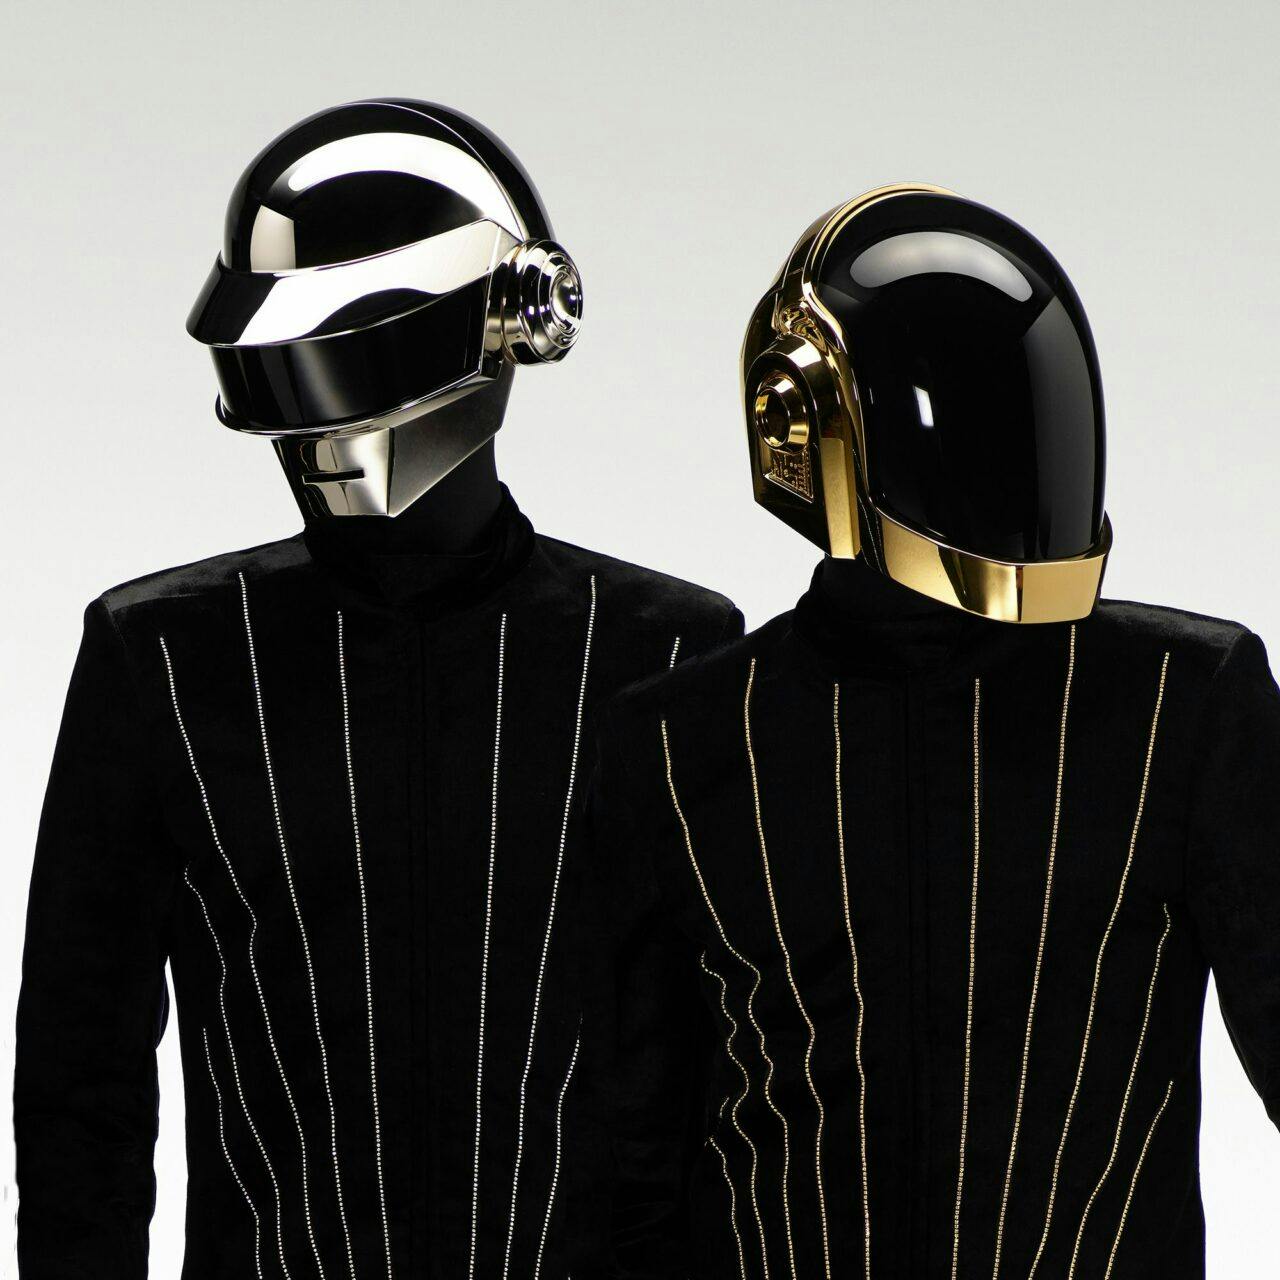 David Guetta sichert sich diese ultraseltene Daft Punk Techno-Platte